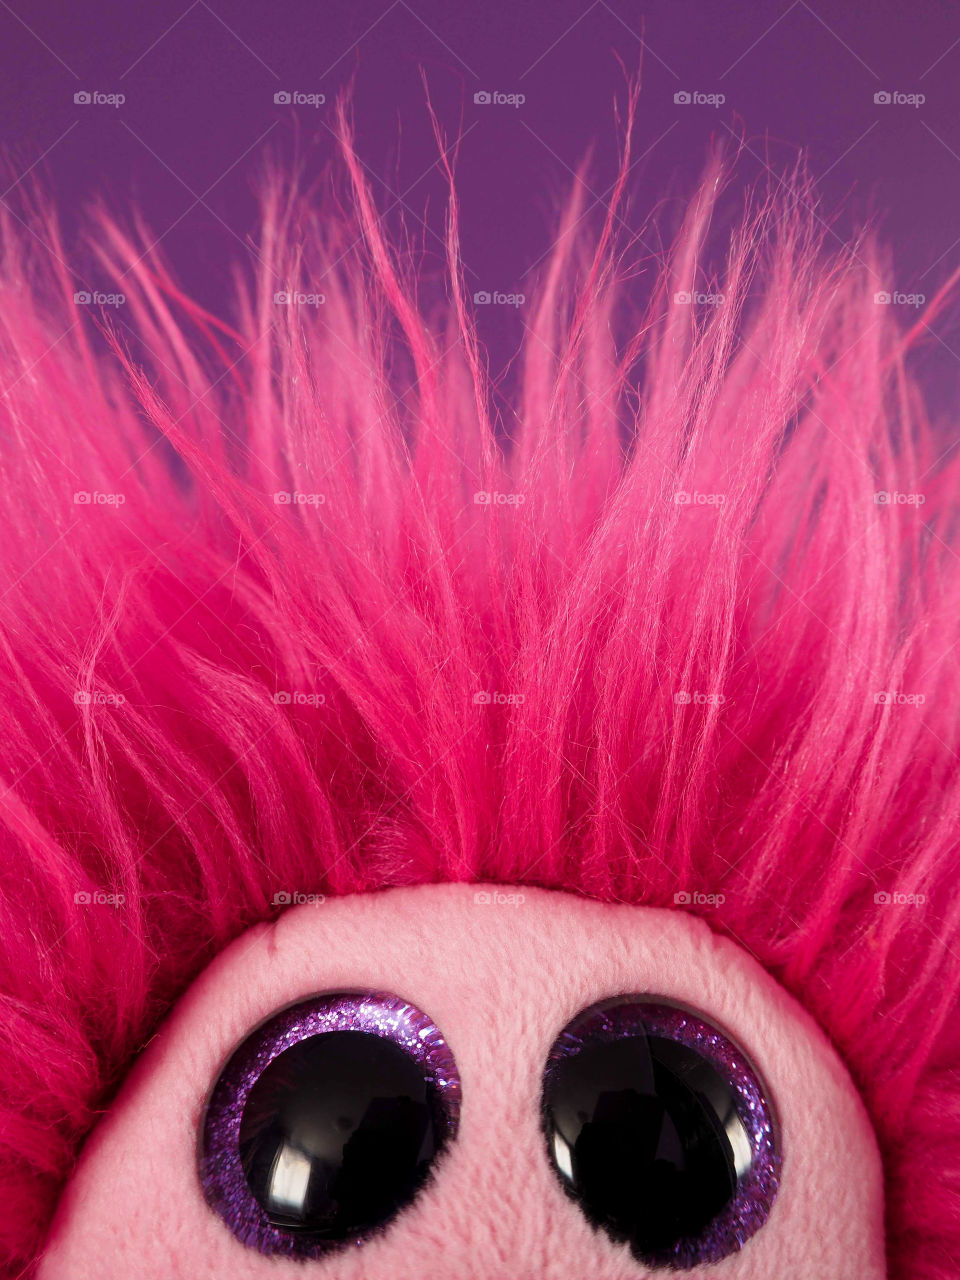 Stuffed toy monster peeking into frame 